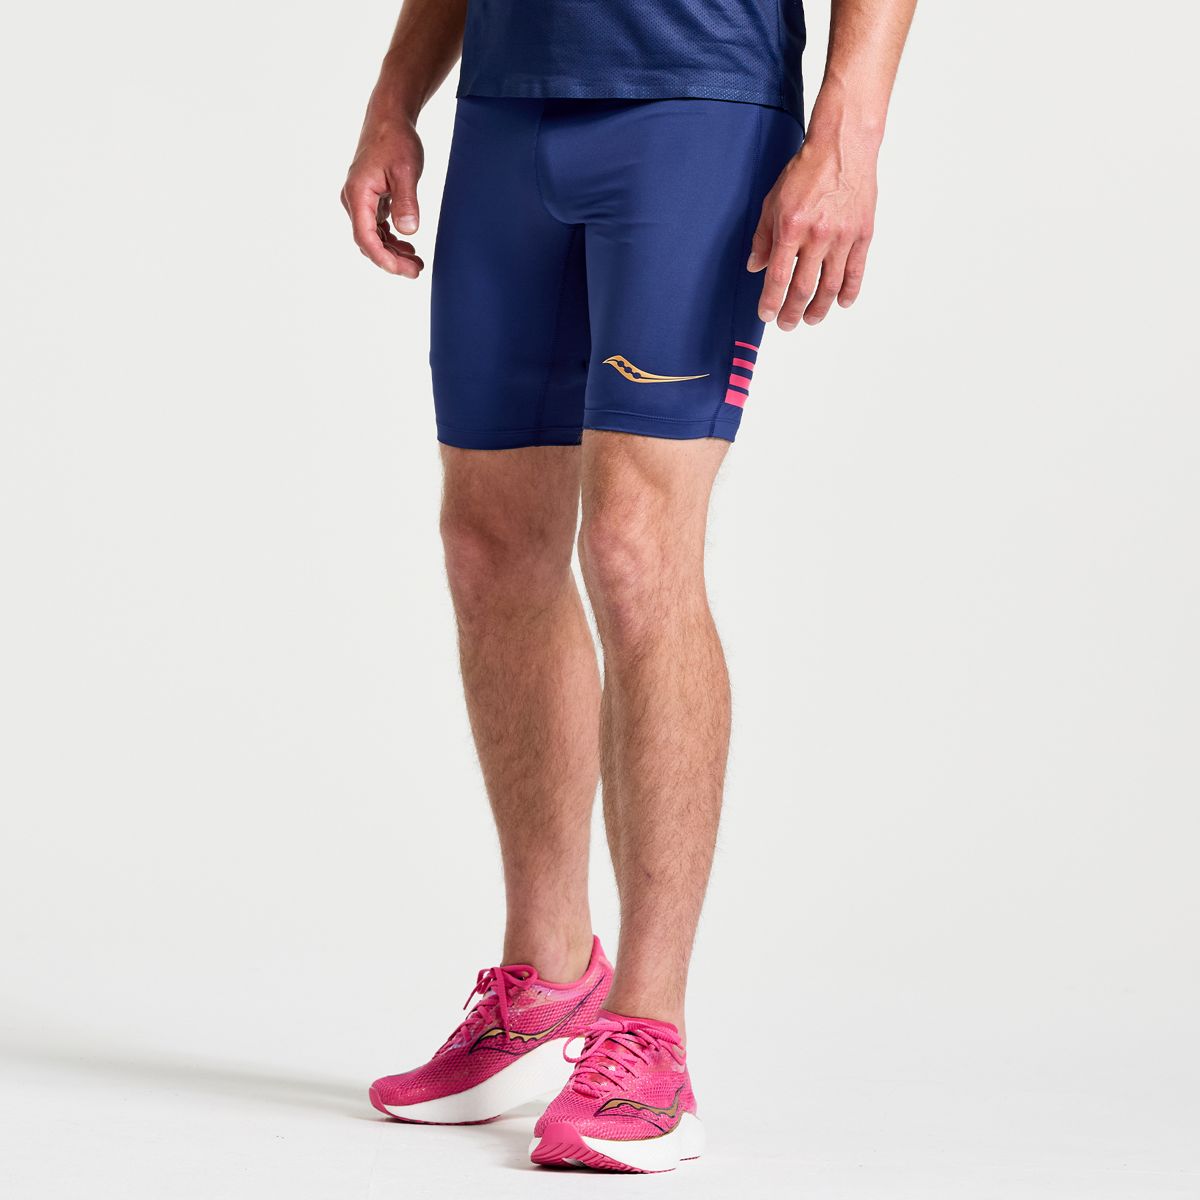 IAMELITE® Men's Tights and Run Shorts Combination